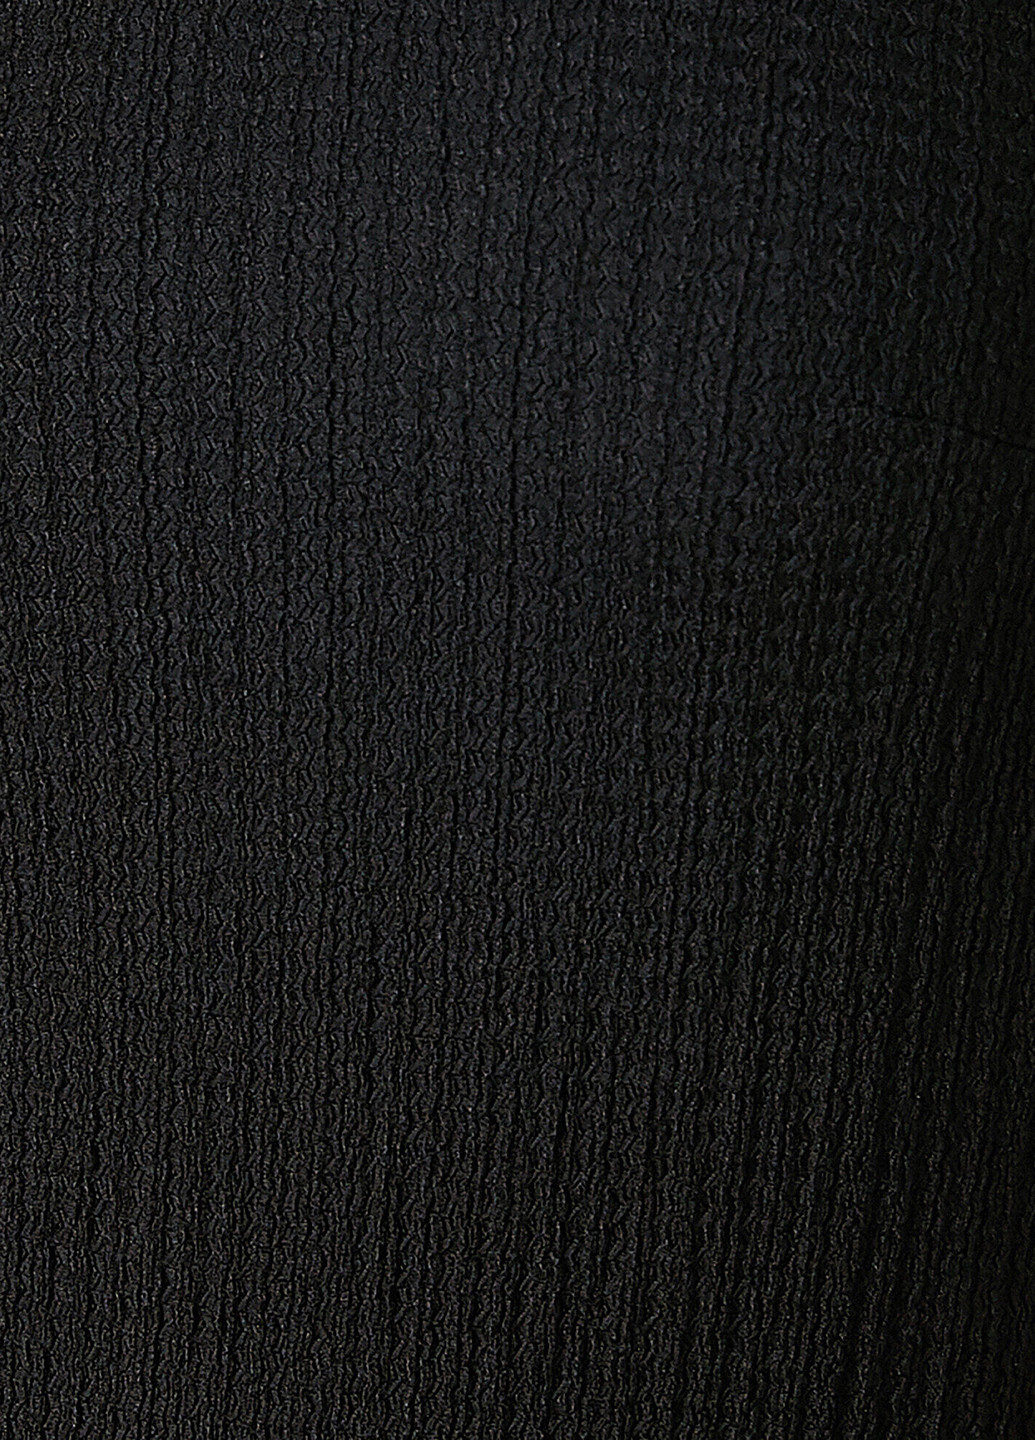 Комбинезон KOTON комбинезон-брюки однотонный чёрный кэжуал полиэстер